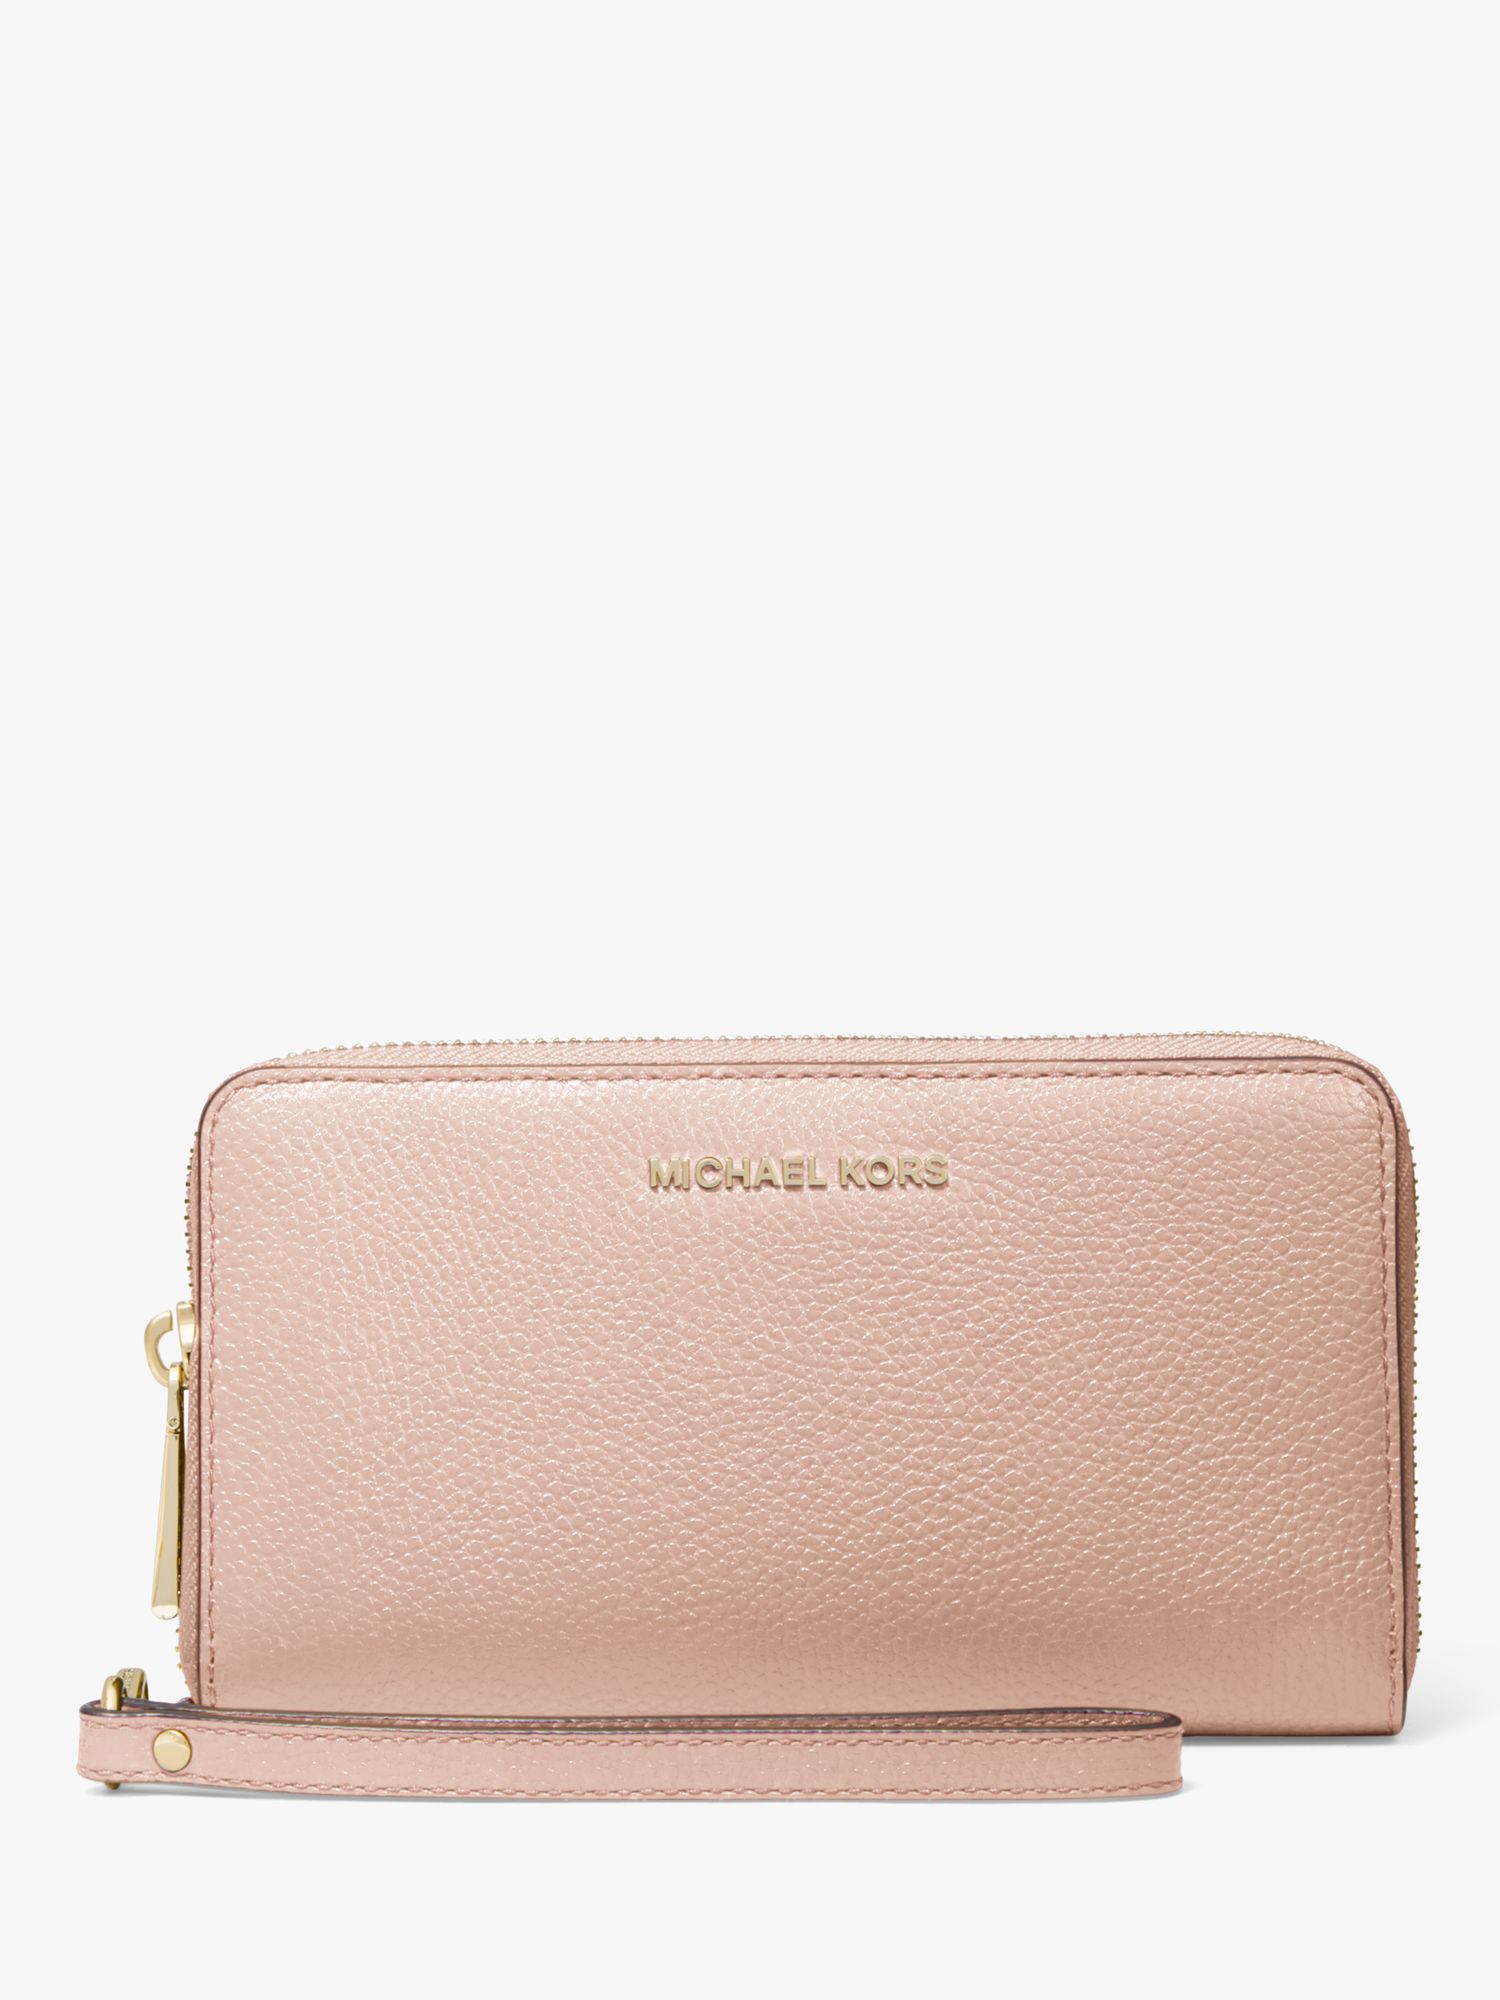 michael kors wallet soft pink